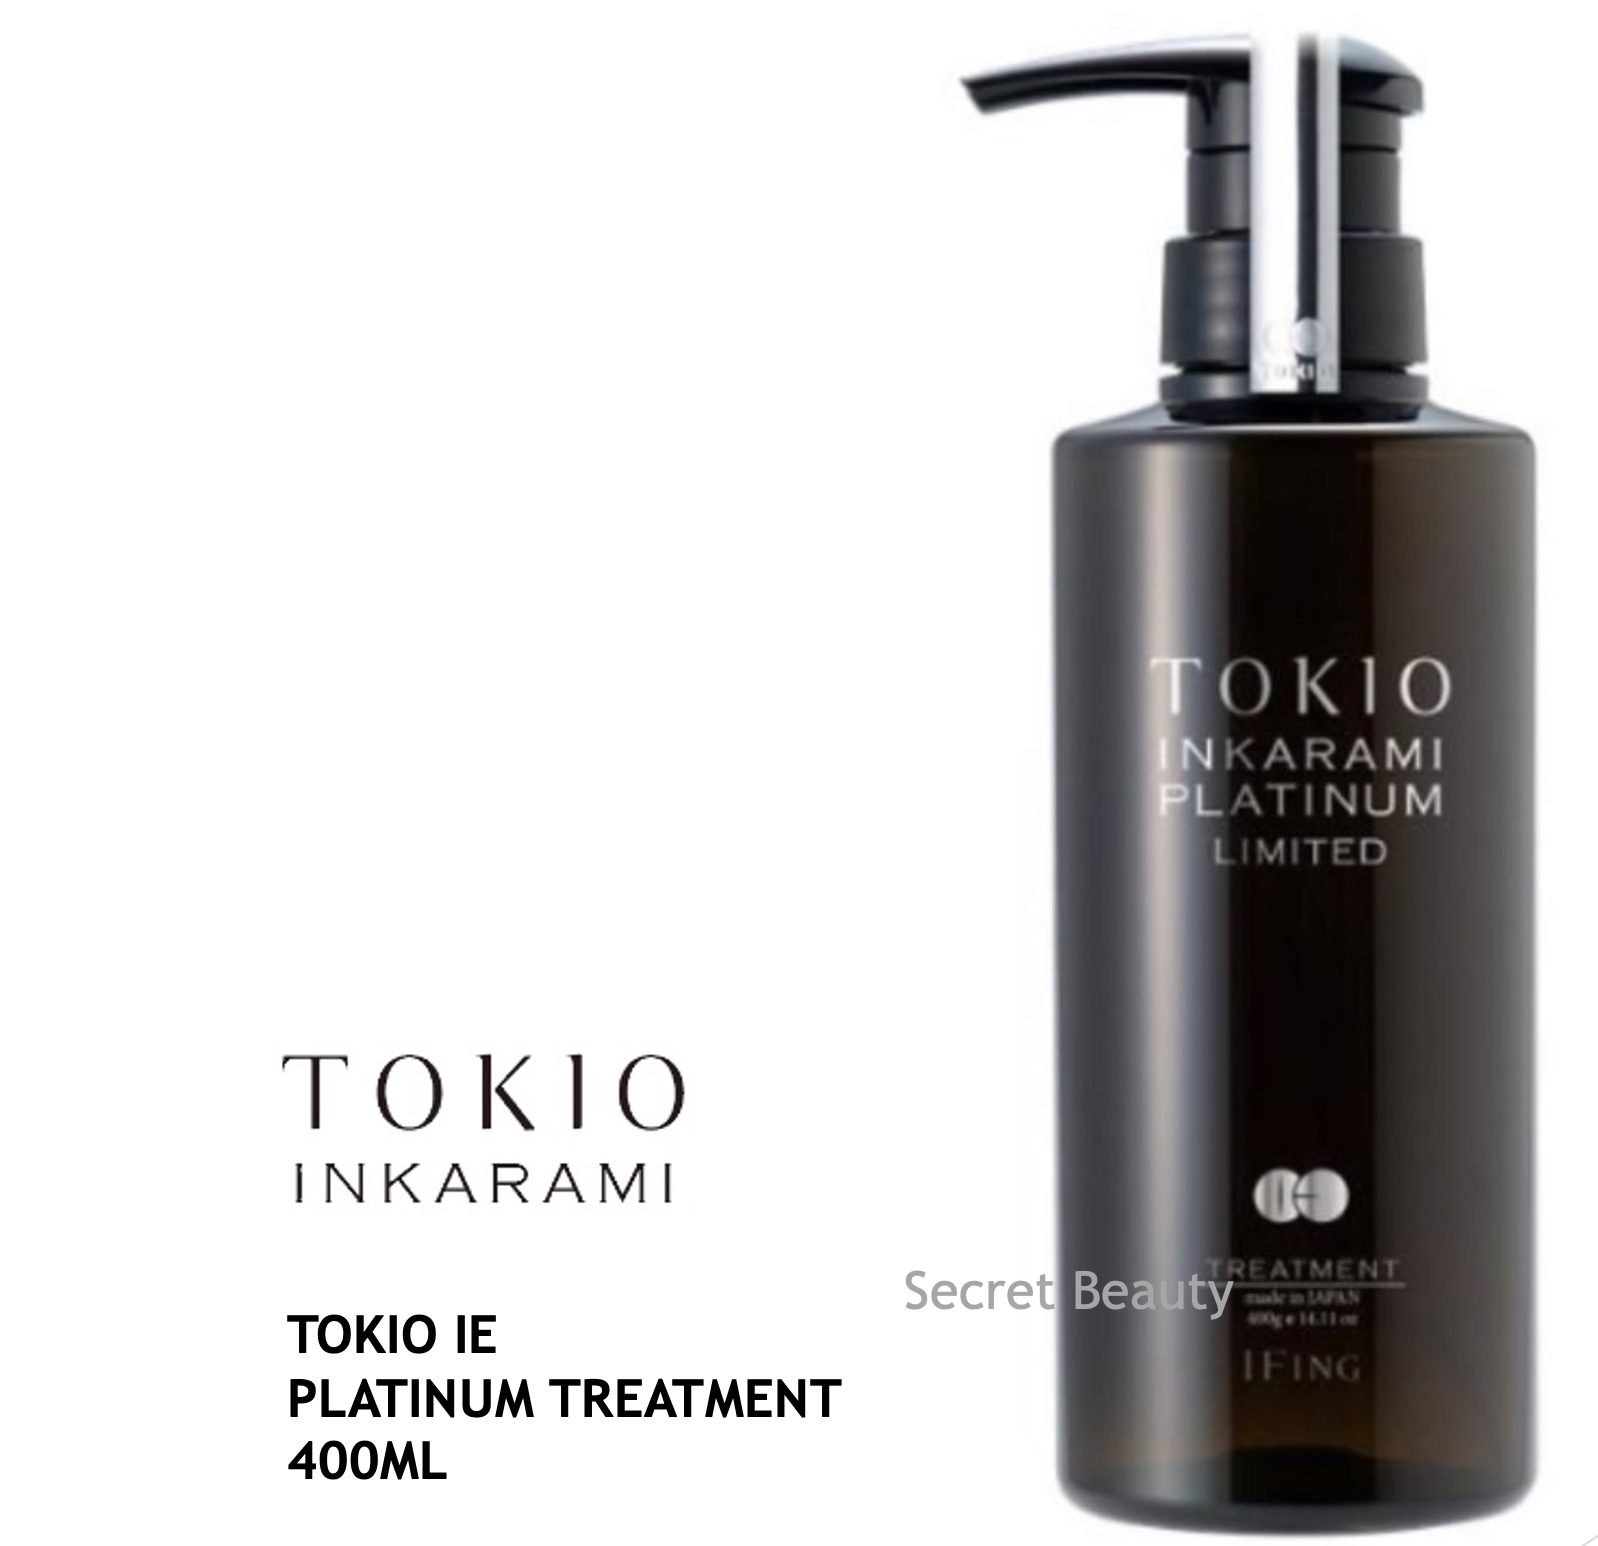 Tokio IE Inkarami Platinum Treatment 400g | Lazada Singapore